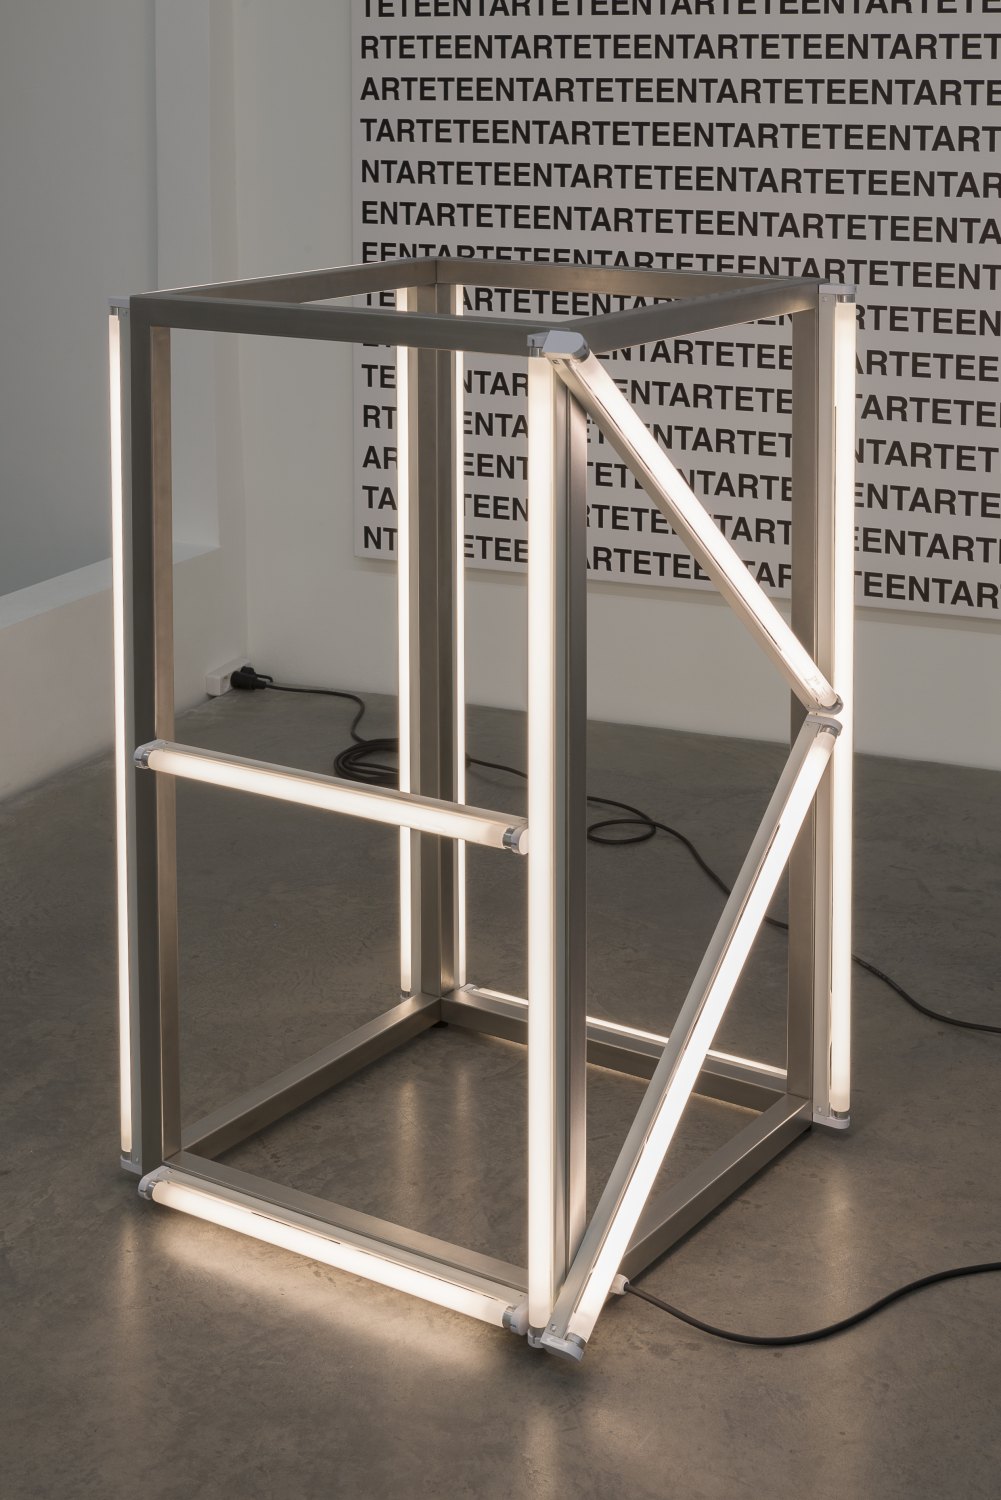 Karl Holmqvist Untitled (FUCK), 2016 Steel, fluorescent tube, 120 x 73 x 73 cm  